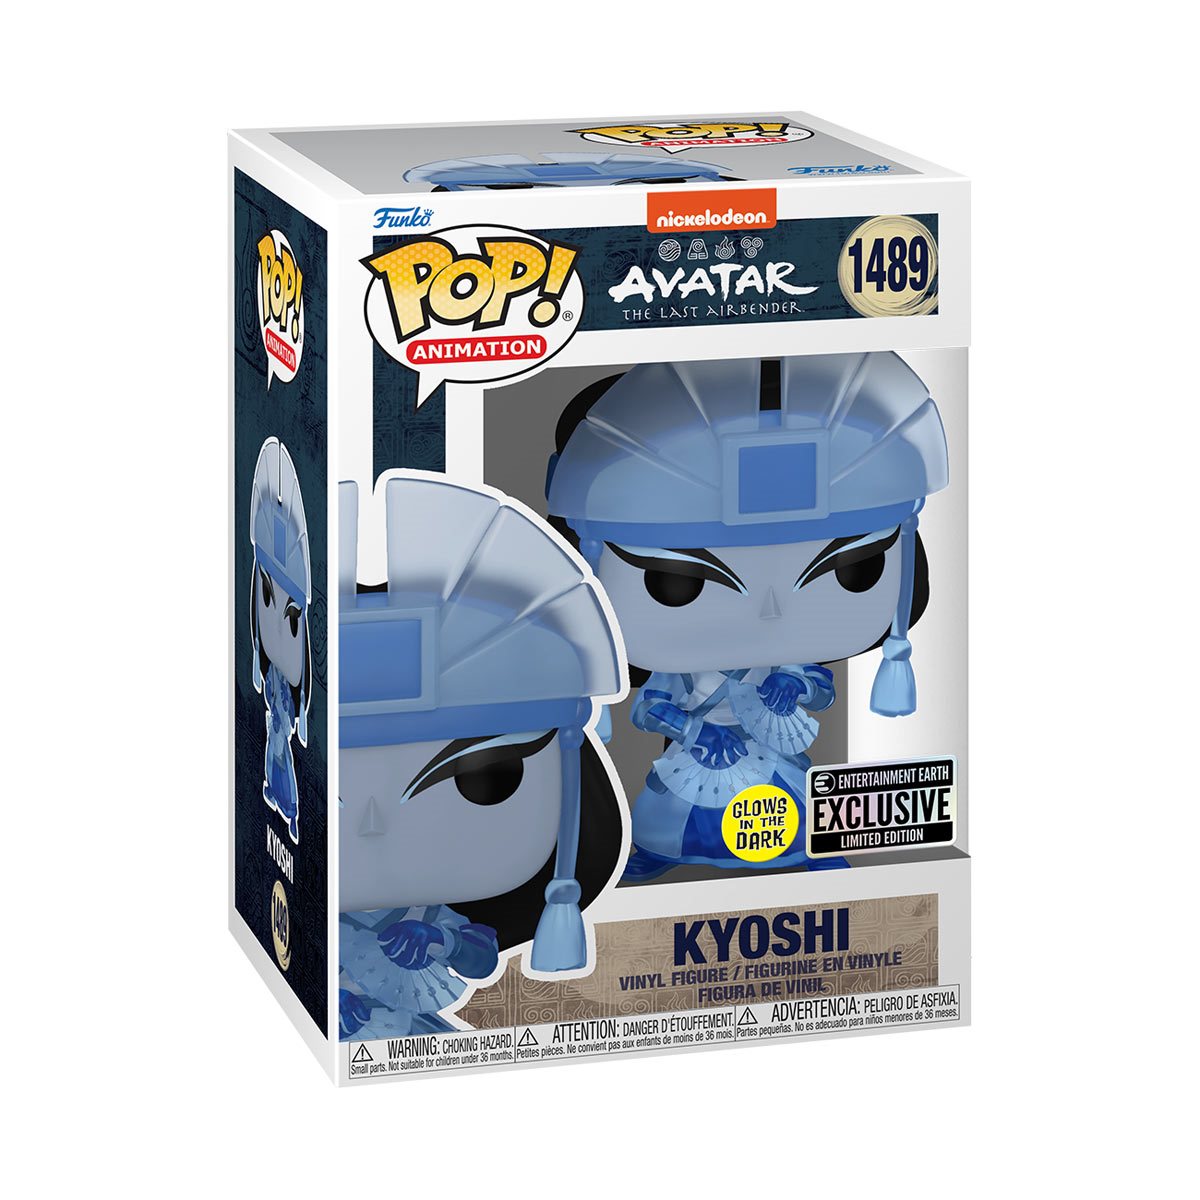 Mini) Plushie Avatar - Blue Guy